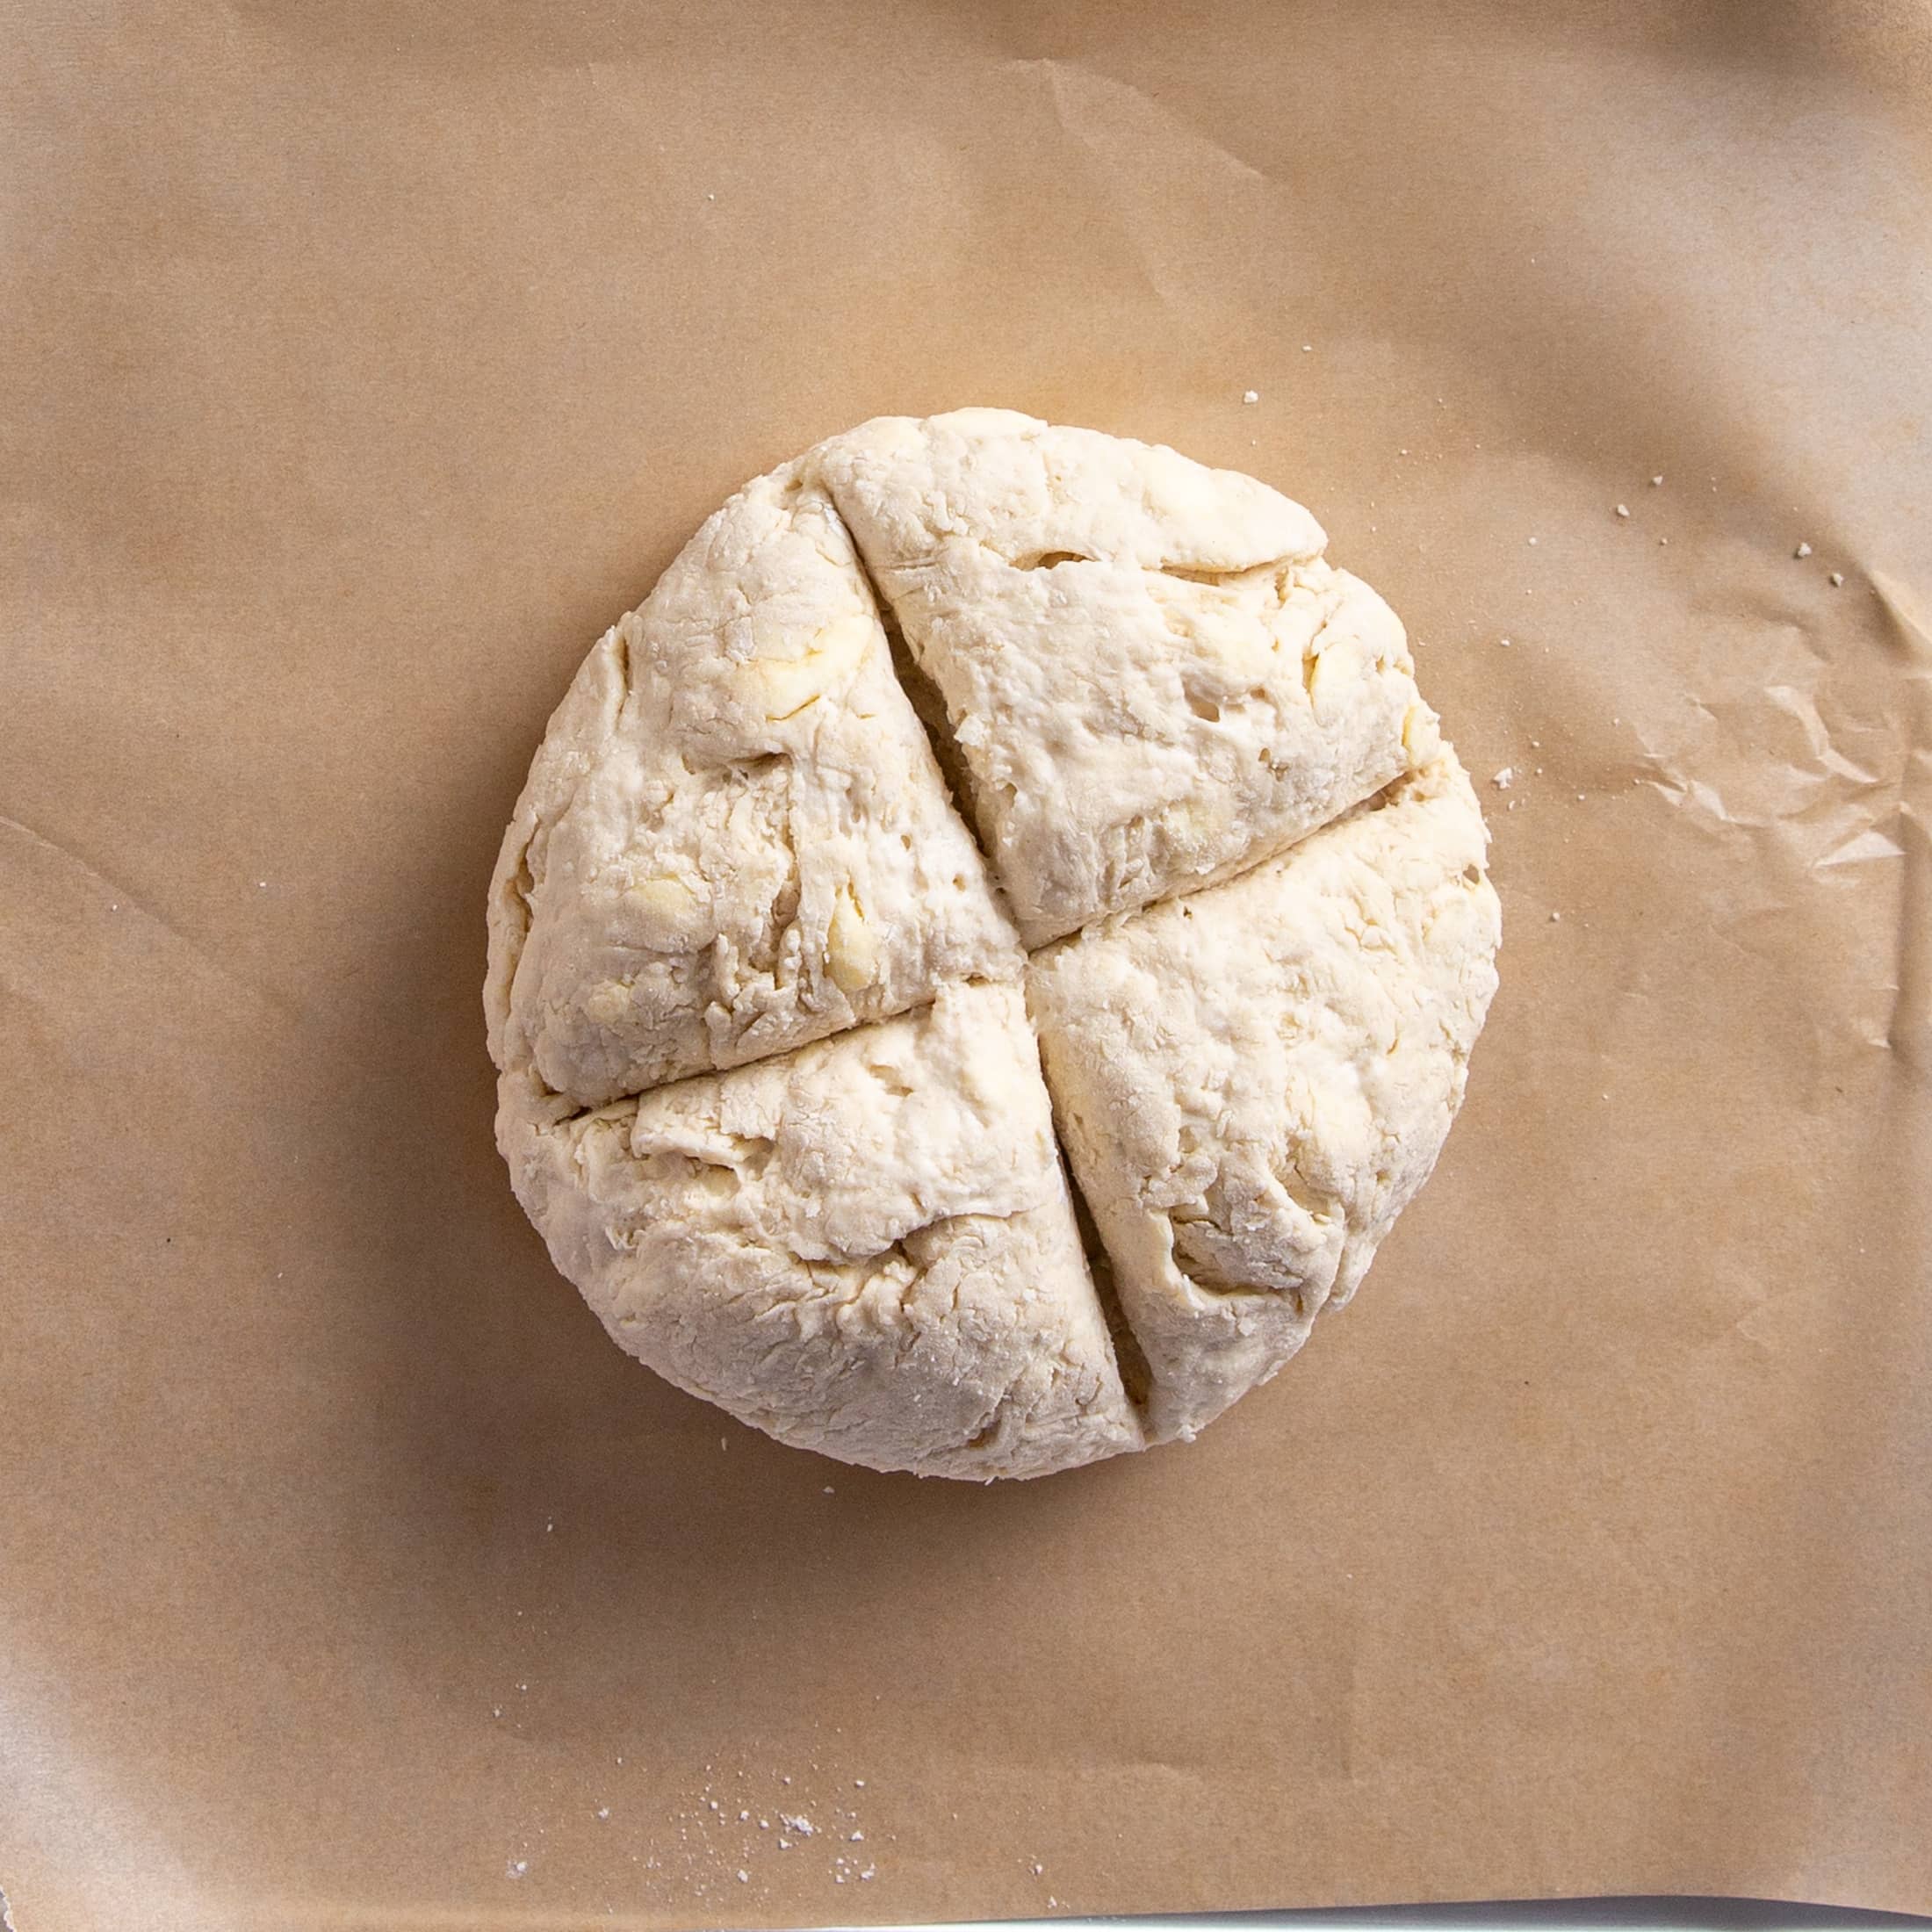 https://bakerbettie.com/easy-irish-soda-bread-recipe/image-68/